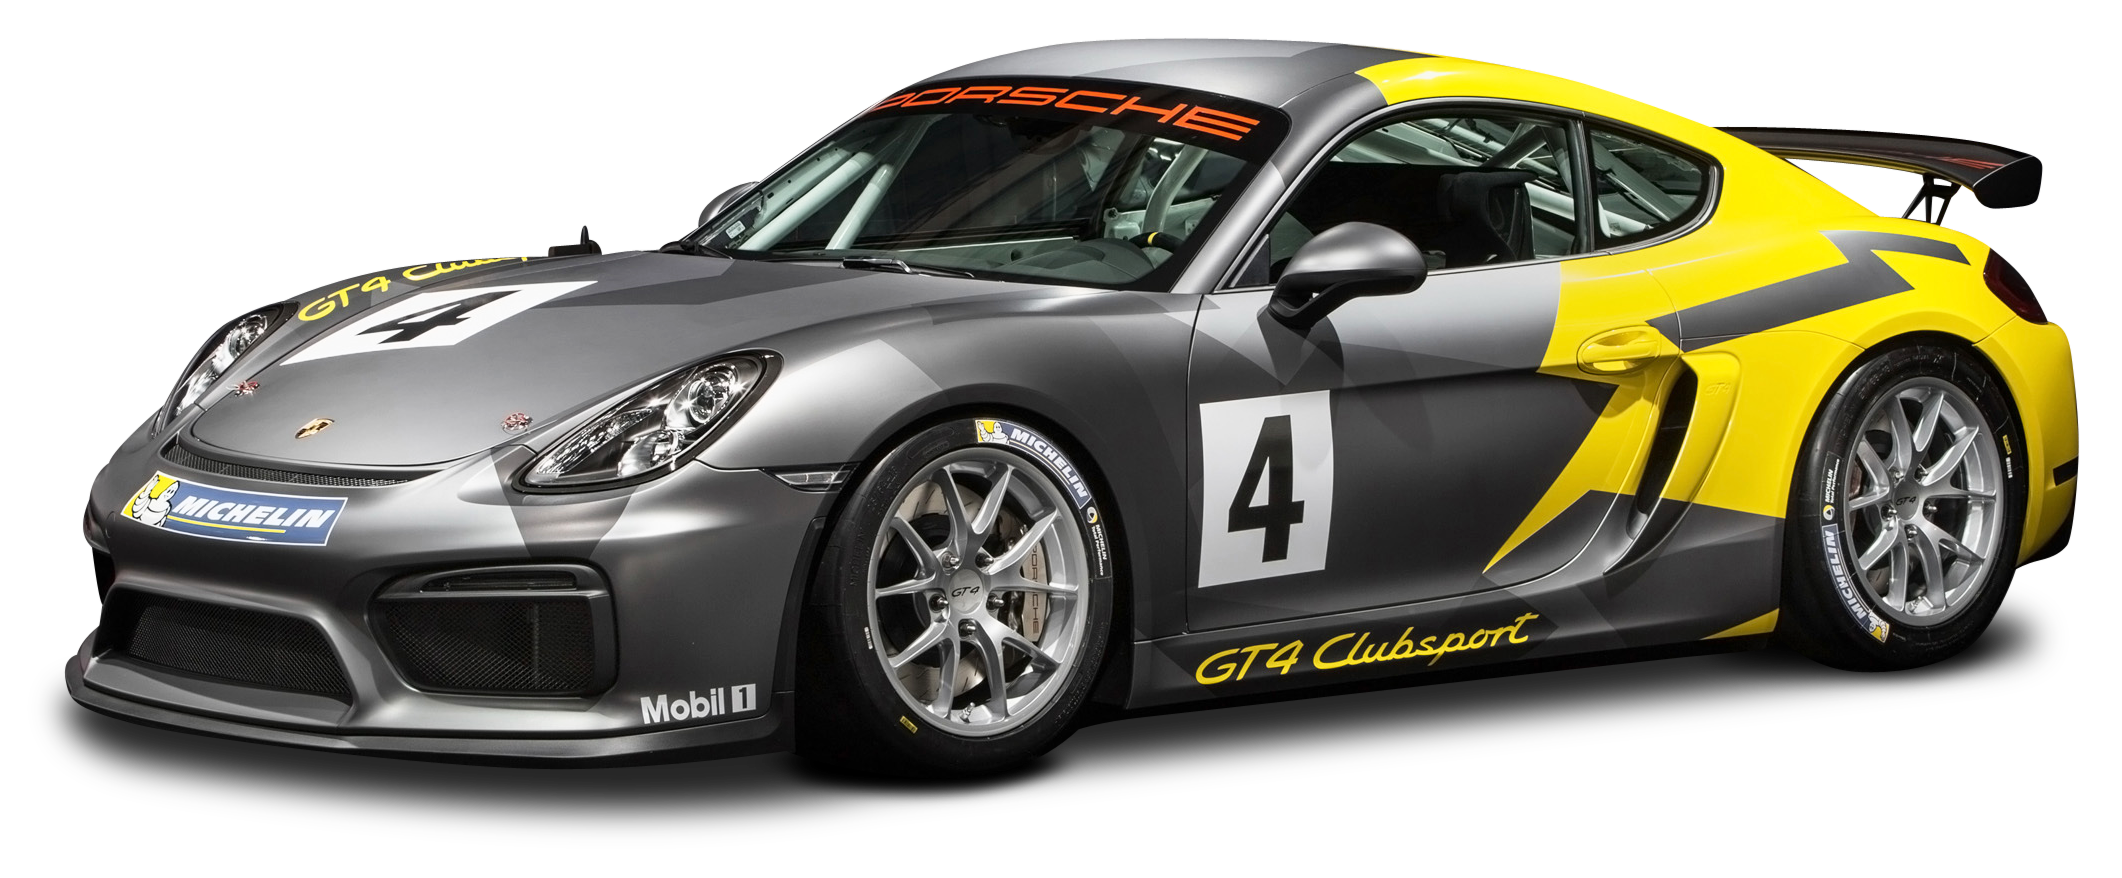 Pngpix Com Porsche Cayman Gt4 Clubsport Racing Car Png Image.png (2122×878) | Coches | Pinterest - Porsche, Transparent background PNG HD thumbnail